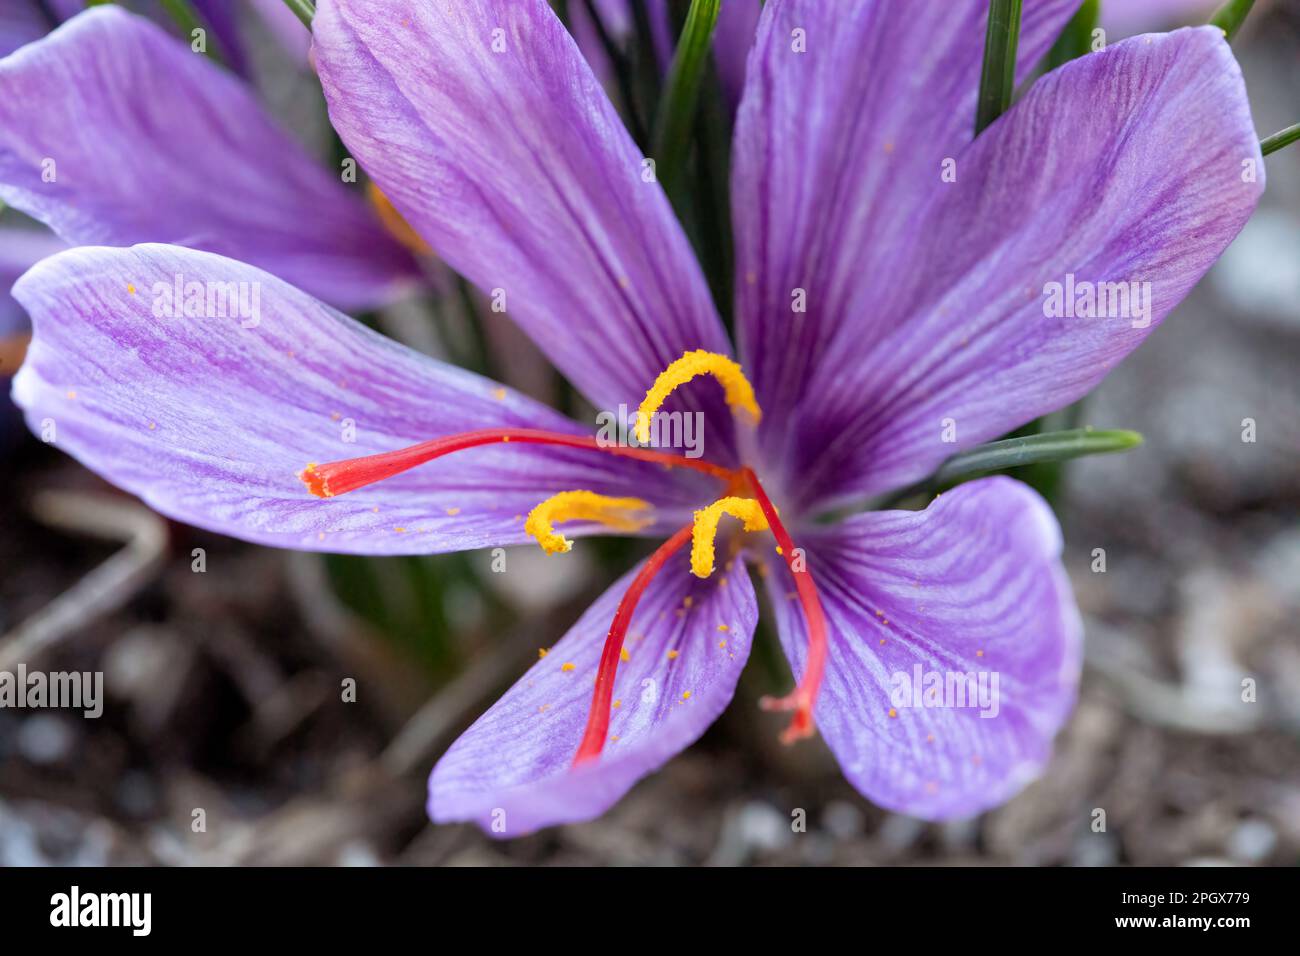 Saffron Crocus (Crocus sativus), AKA: Autumn crocus in bloom. Its stigmas are known as the spice saffron. Stock Photo